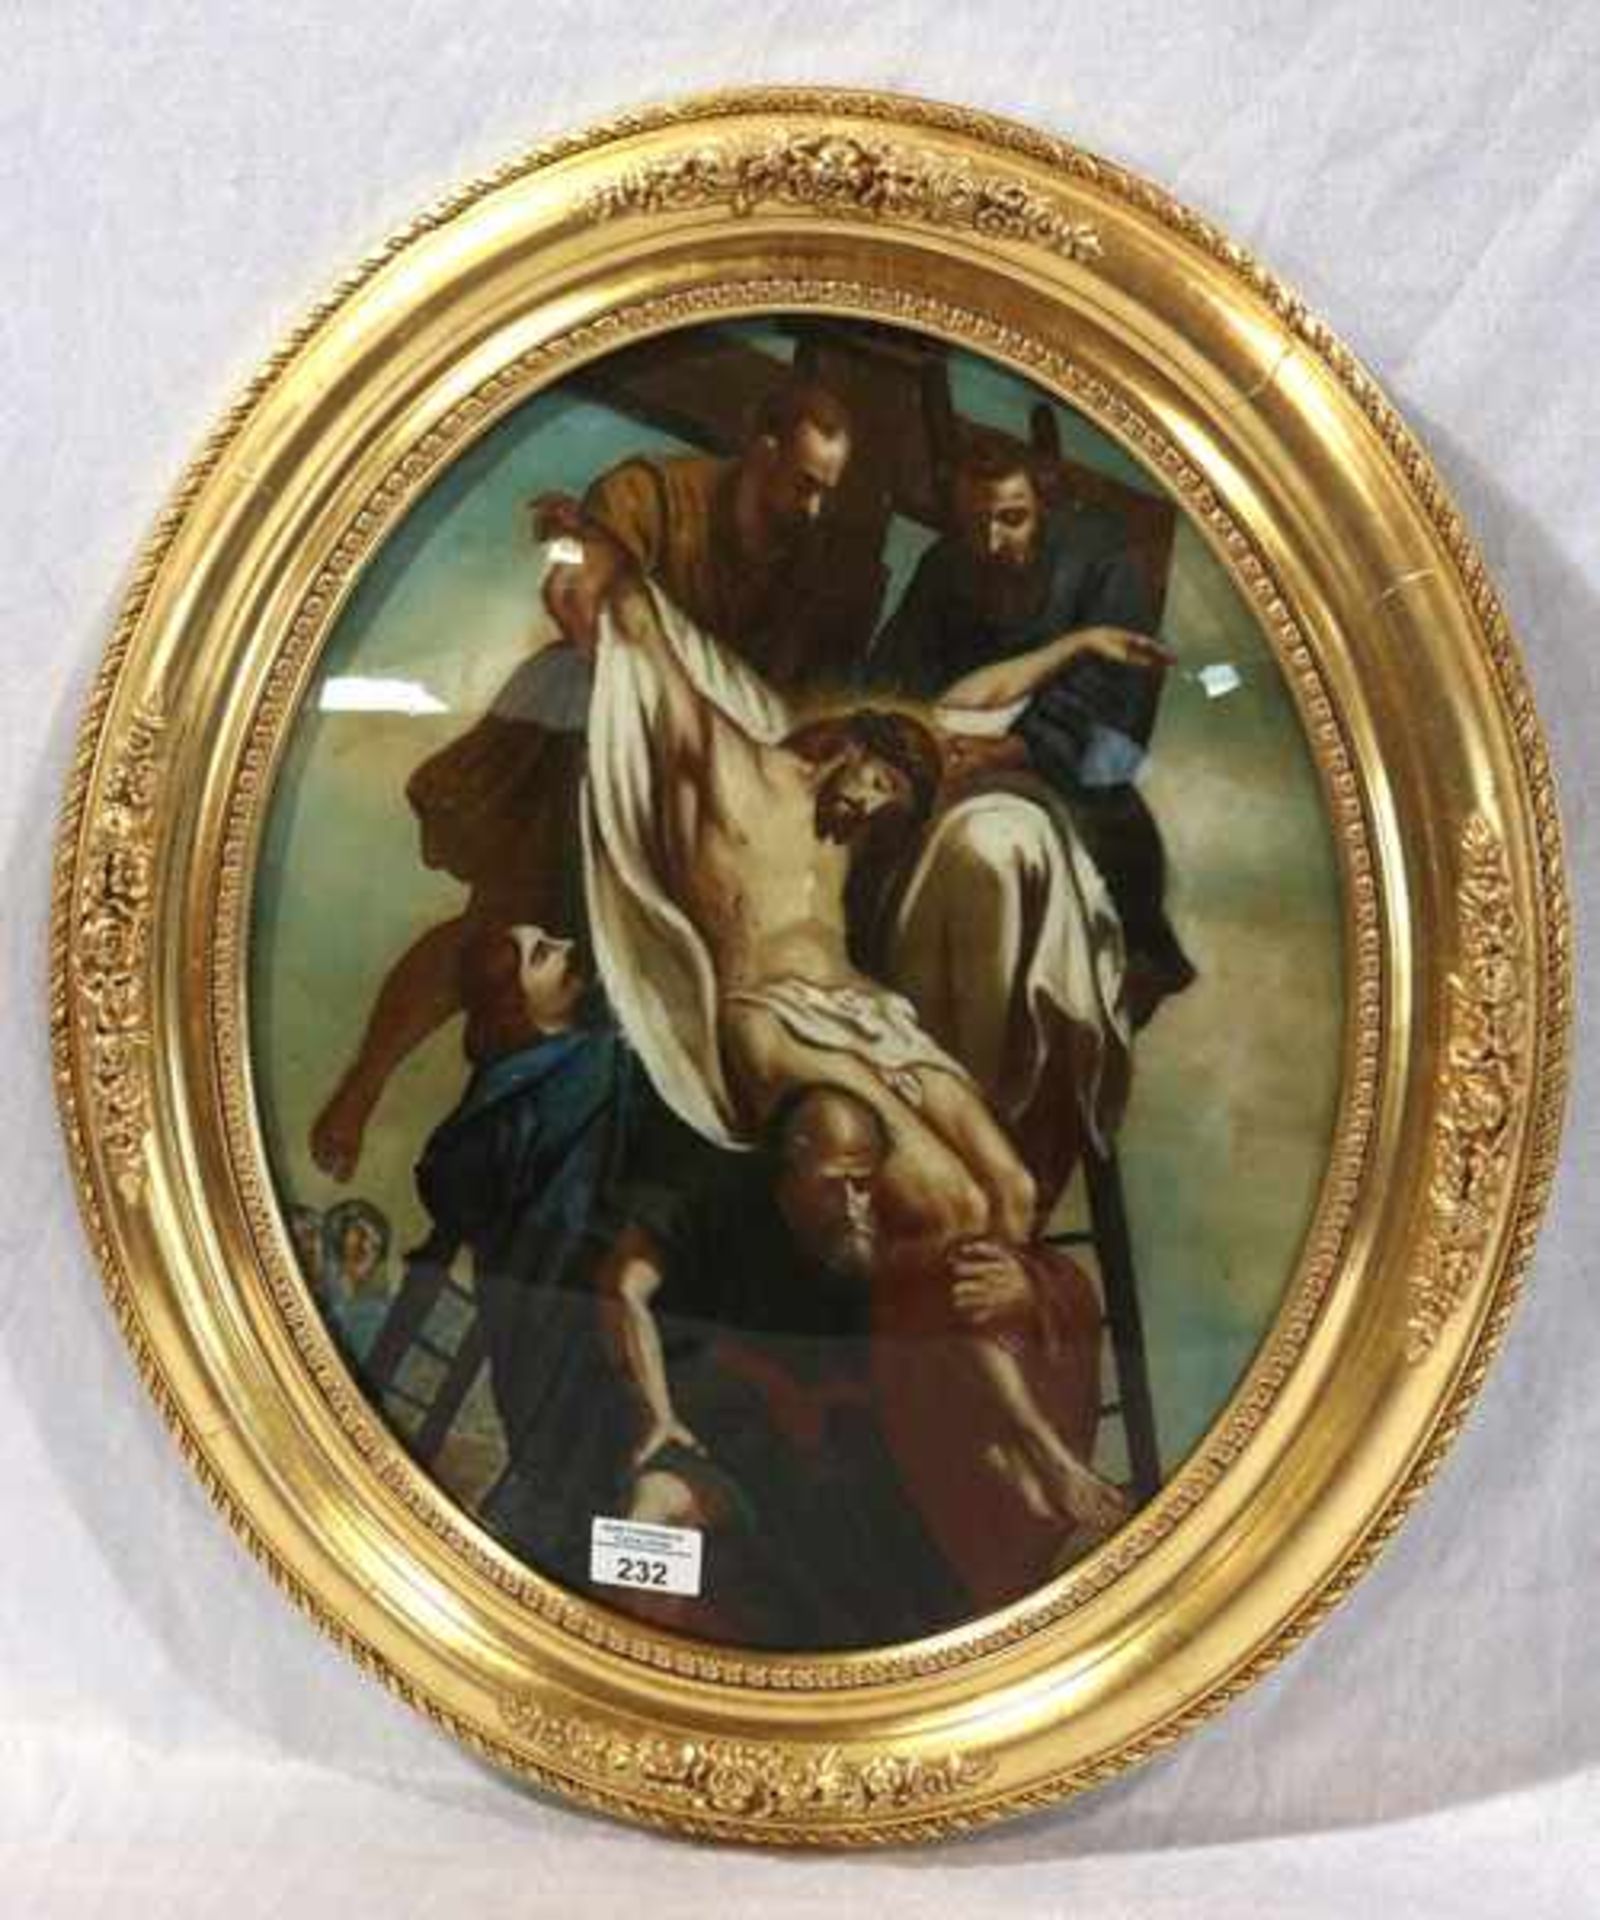 Hinterglasbild 'Kreuzabnahme', um 1900, oval gerahmt, 60 cm x 50 cm